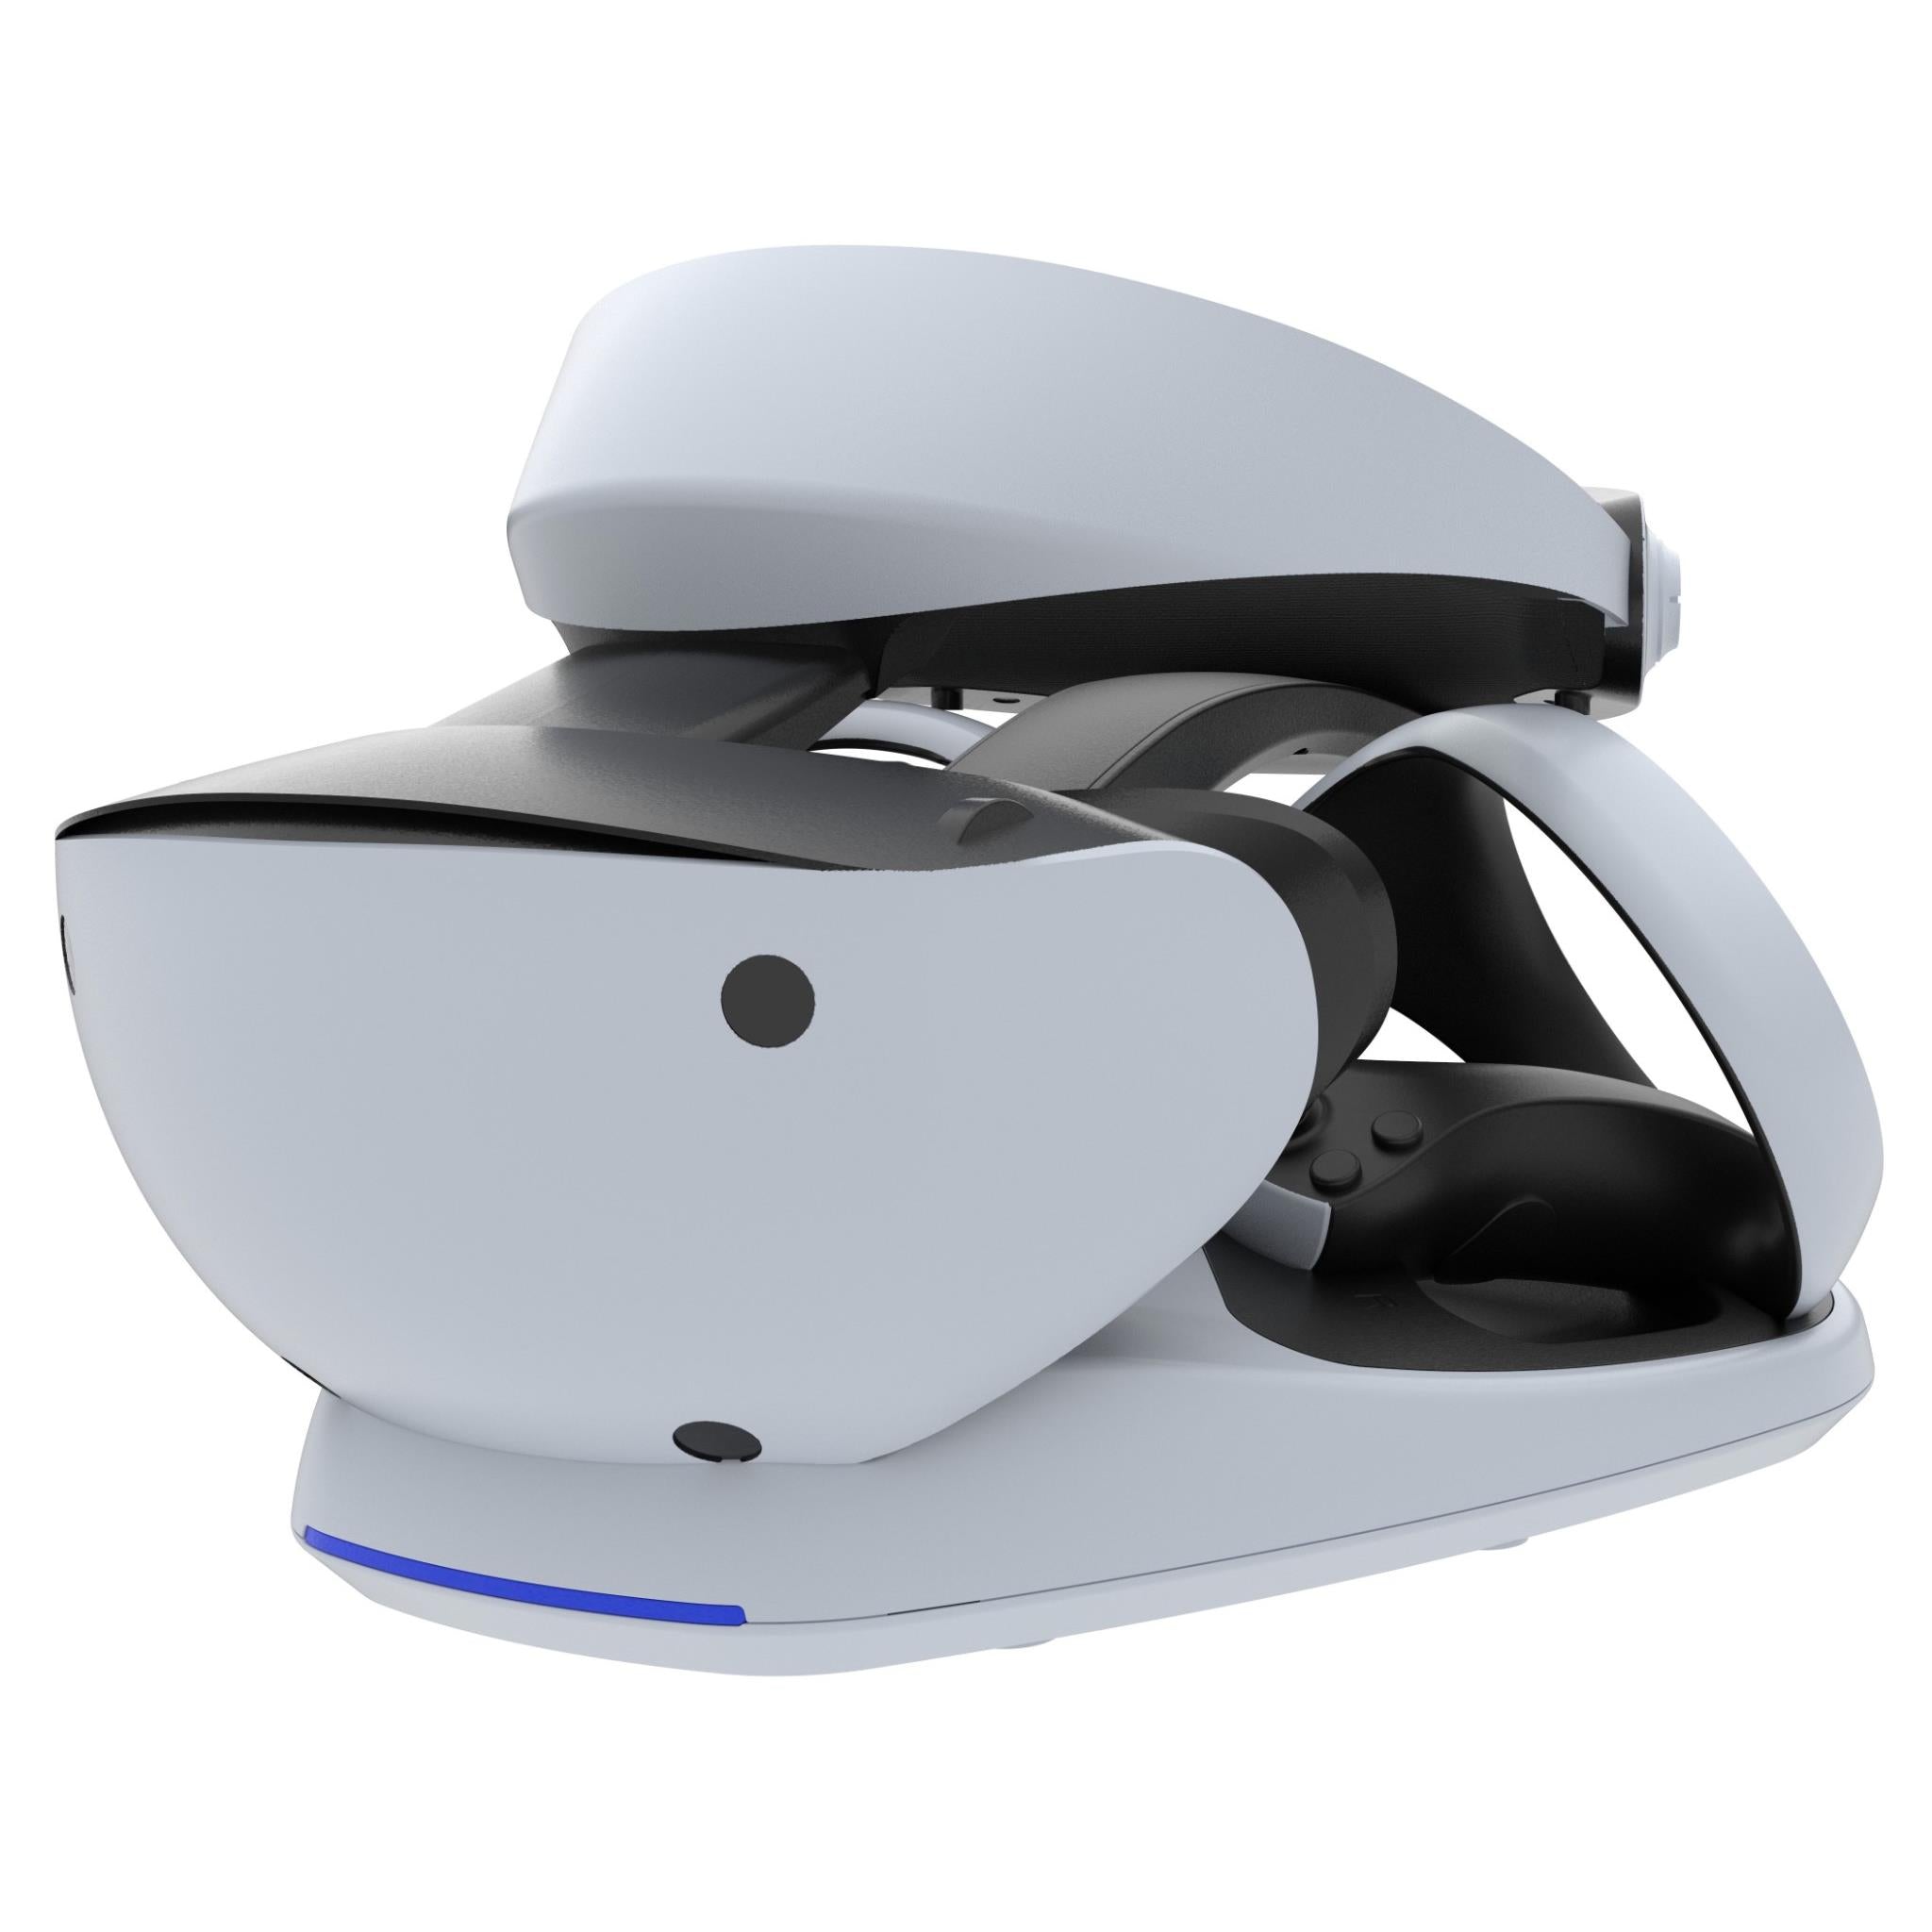 Sony PlayStation VR2 Sense controller charging station Multi